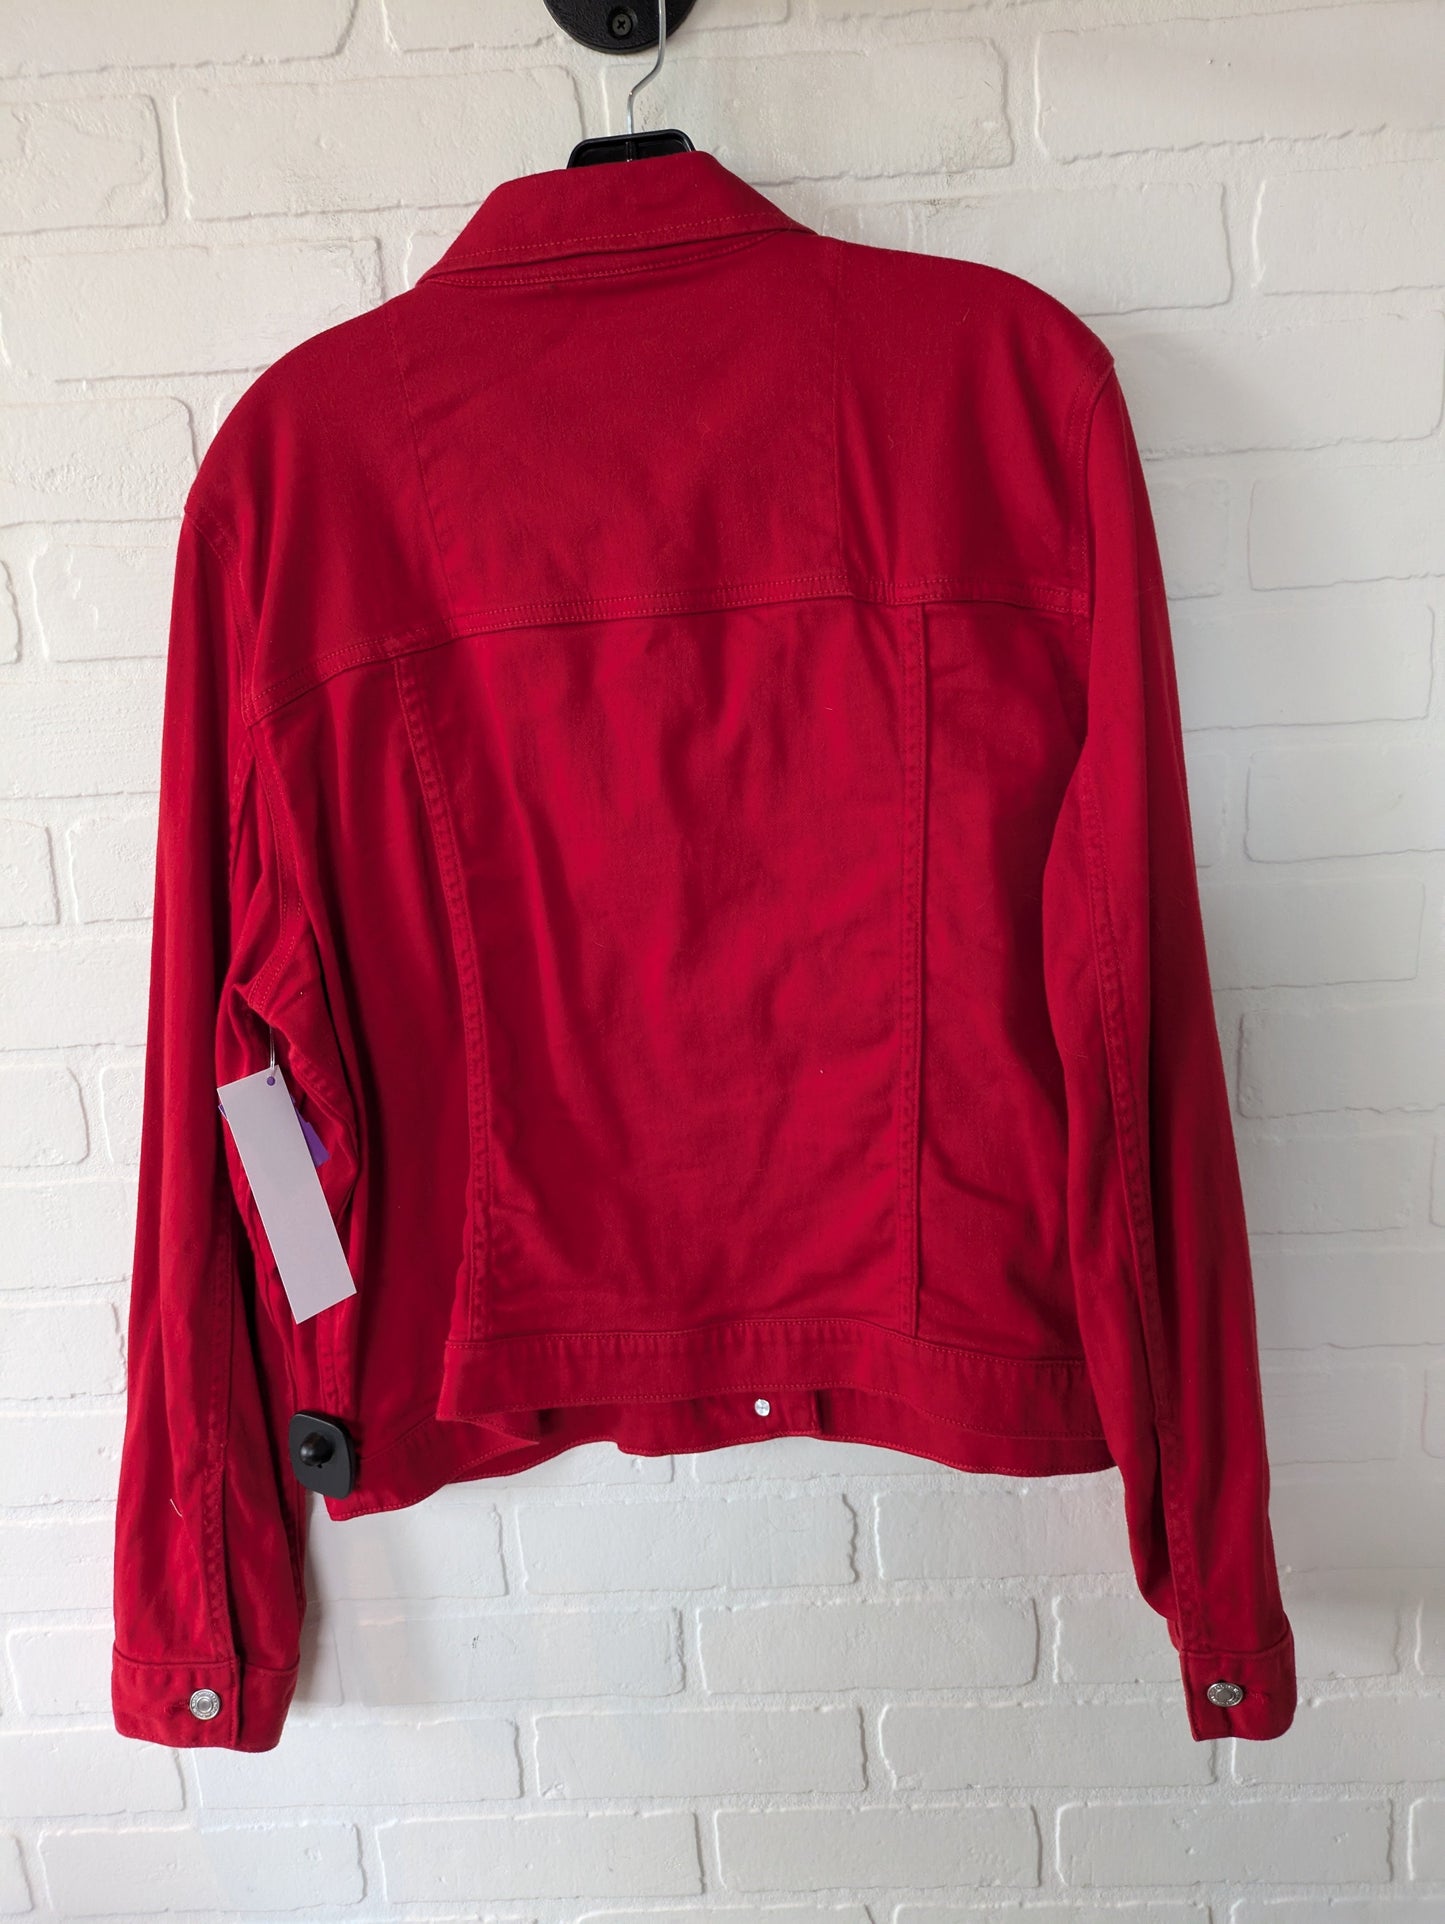 Red Denim Jacket Designer Michael Kors, Size Xxl